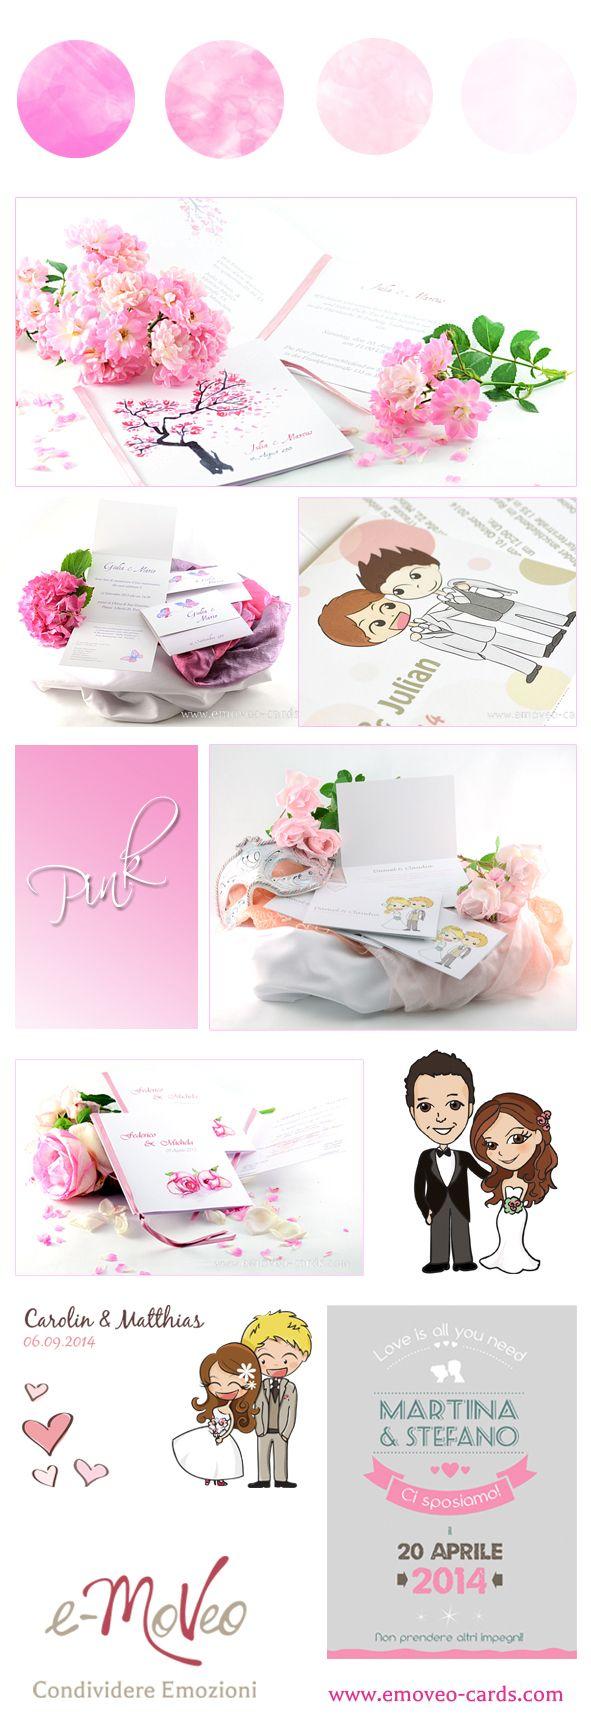 Wedding - Pink wedding - Matrimonio in rosa e fucsia - Hochzeit in Rose